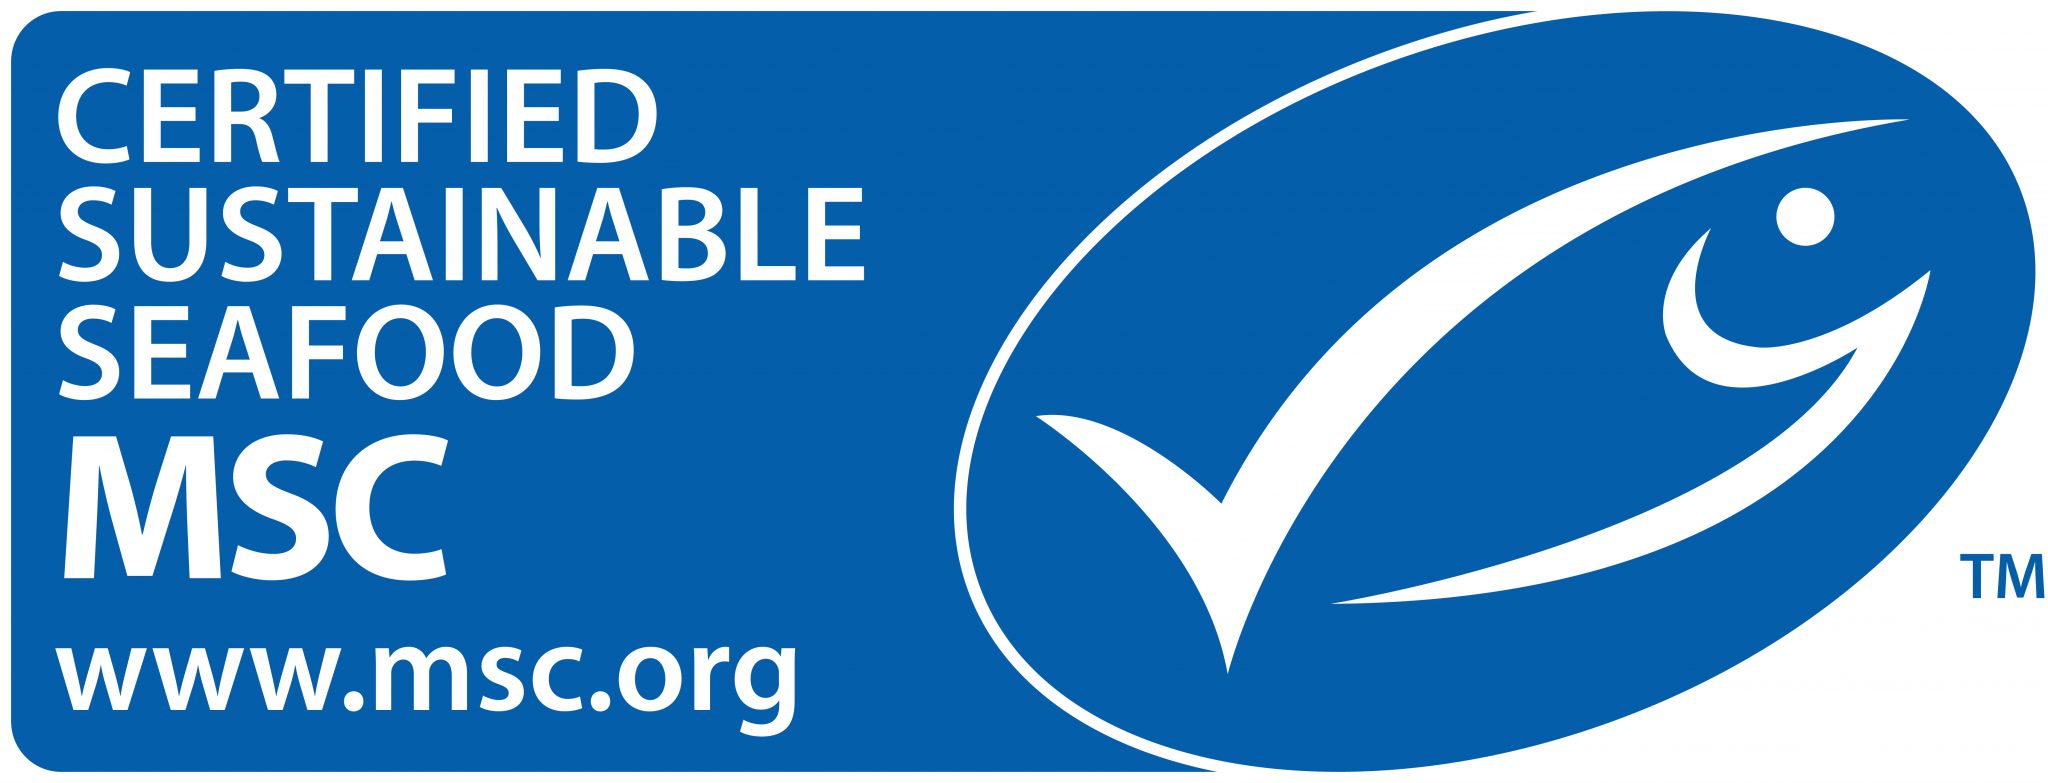 MSC_logo_certified_sustainable_English-Landscape-Blue-RGB-MSC-Web-only.jpg